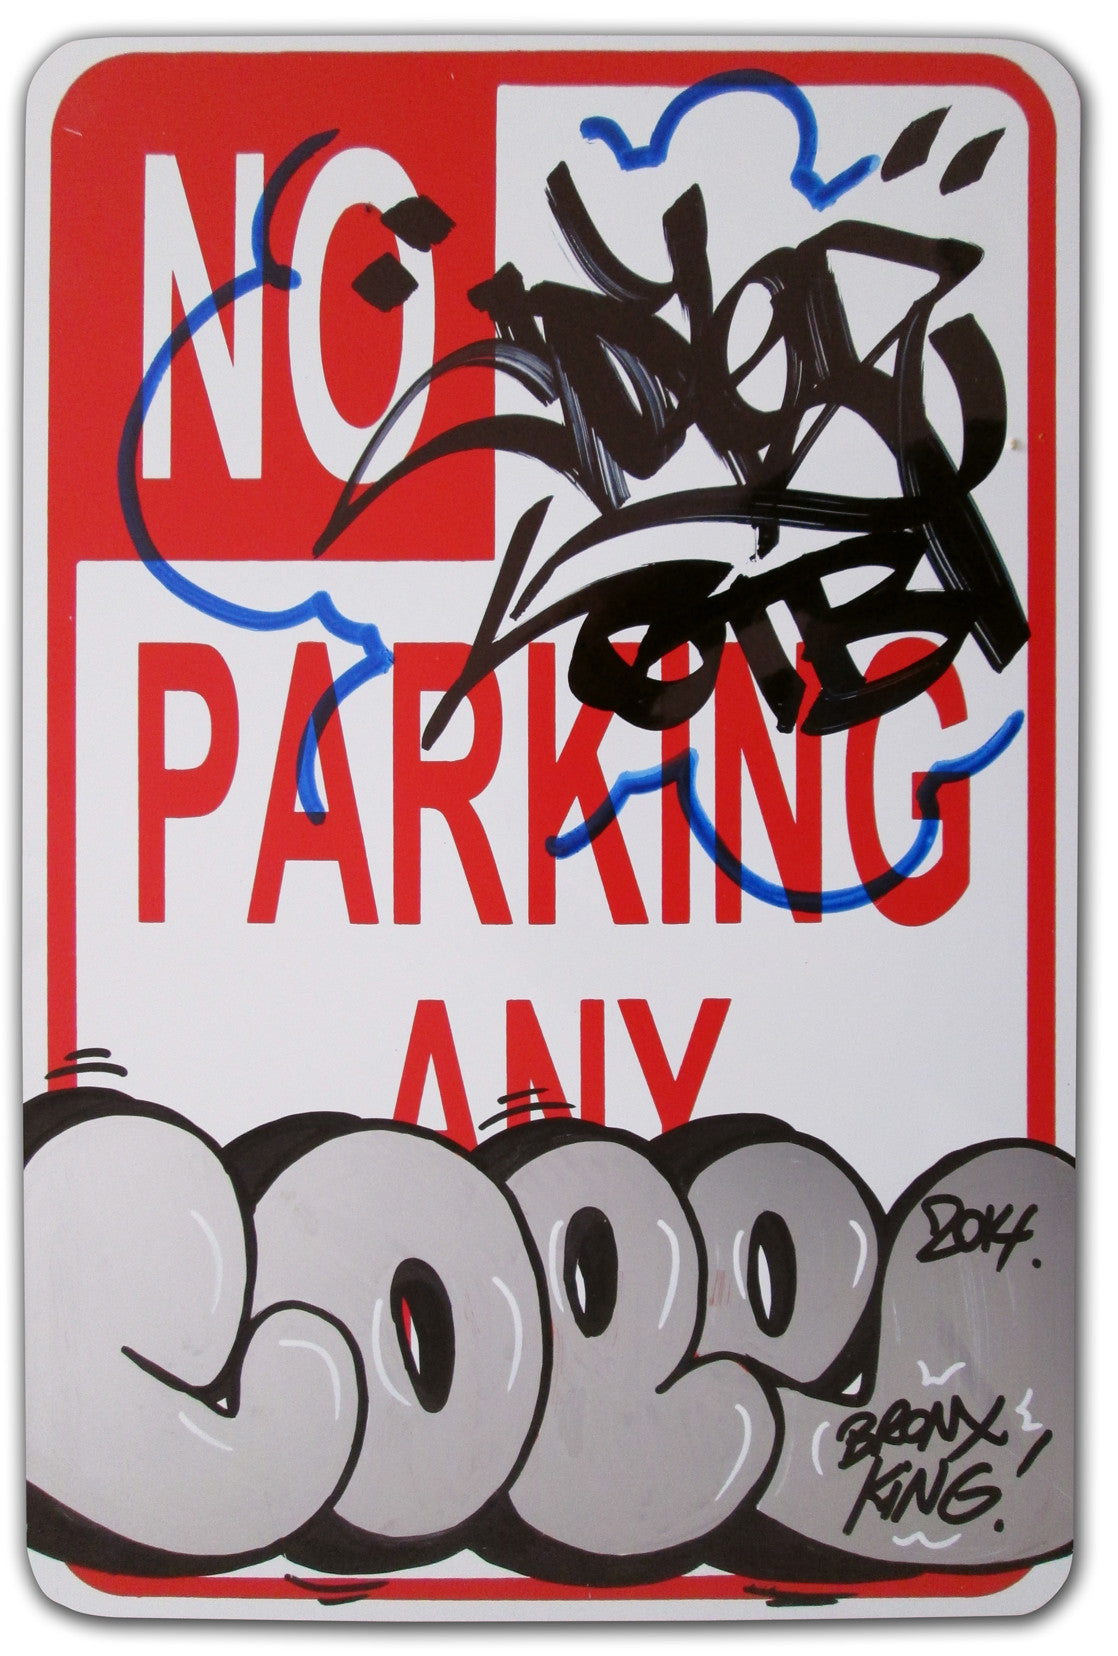 COPE 2 - "Bronx King" No Parking Sign